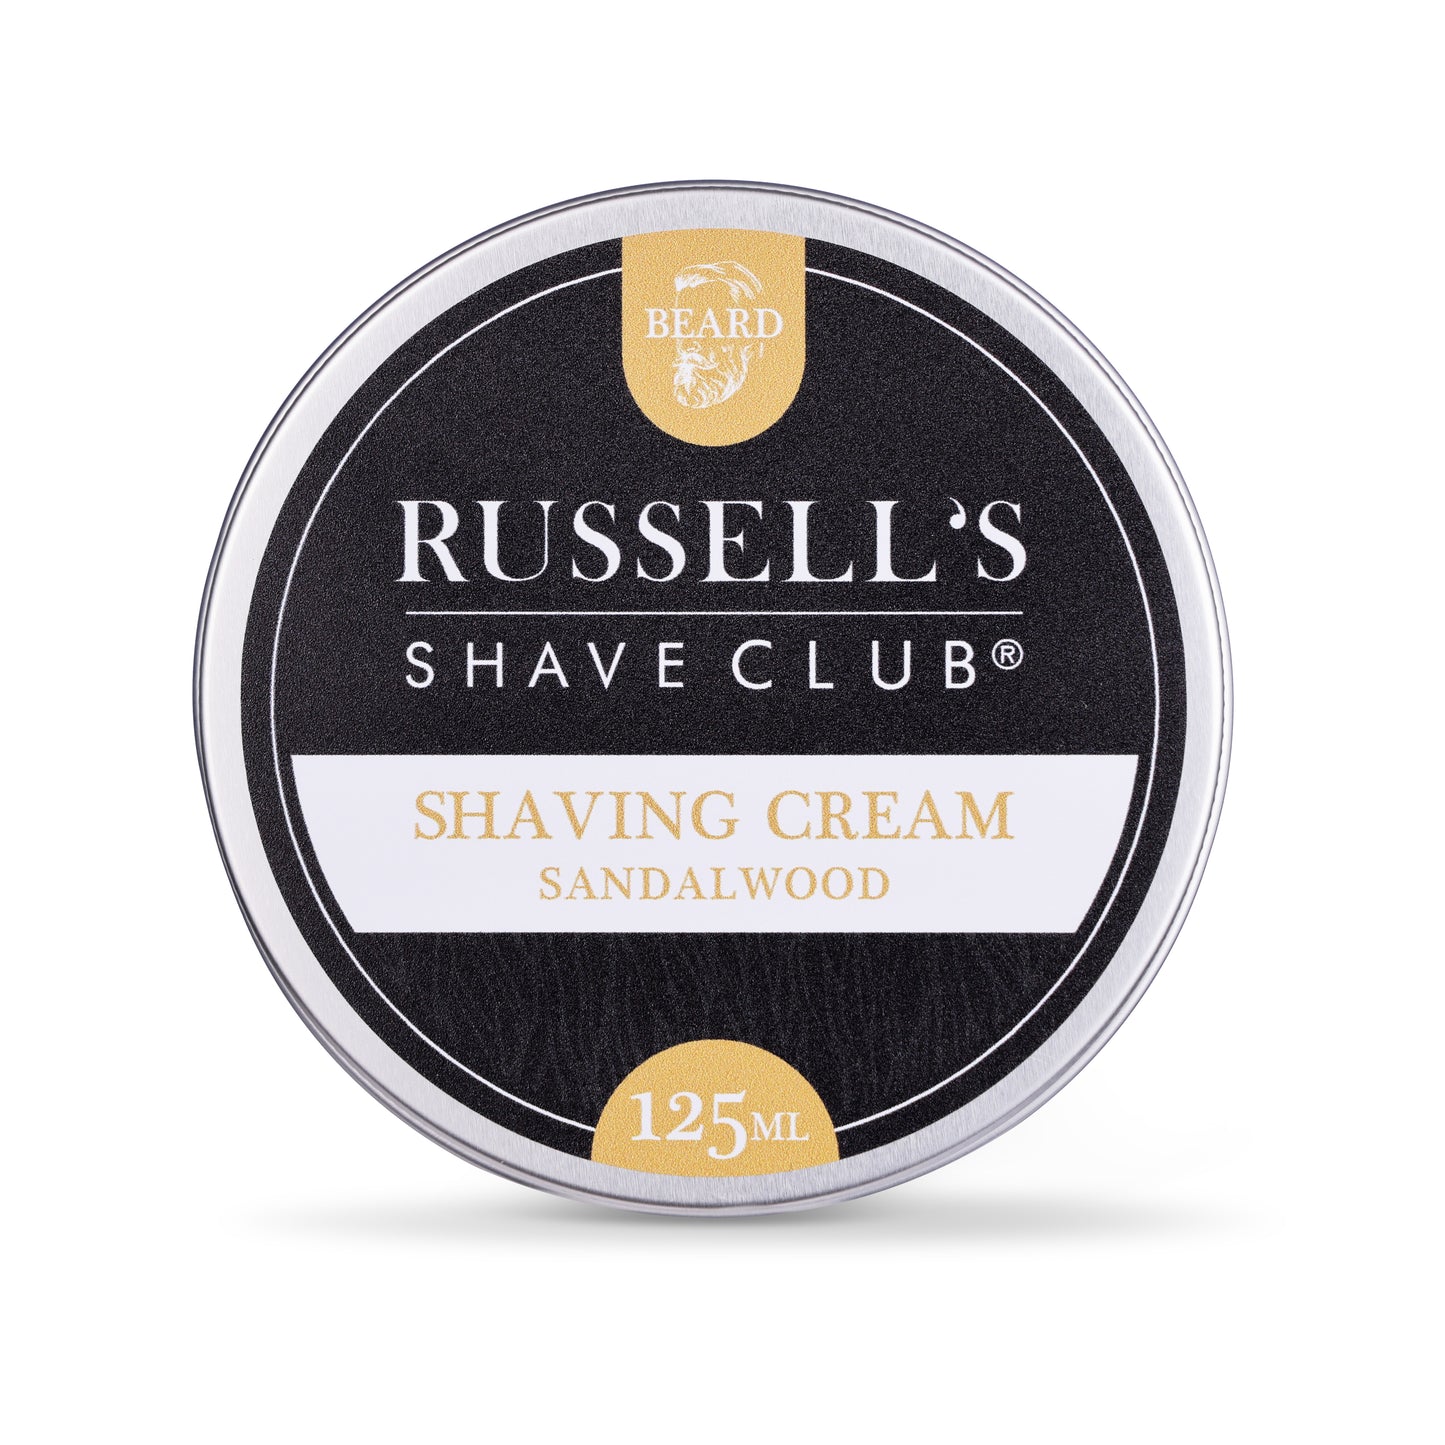 Russell's Perfect Shaving Trio: Pre-Shave Oil, Sandalwood Shaving Cream, & Post-Shave Balm